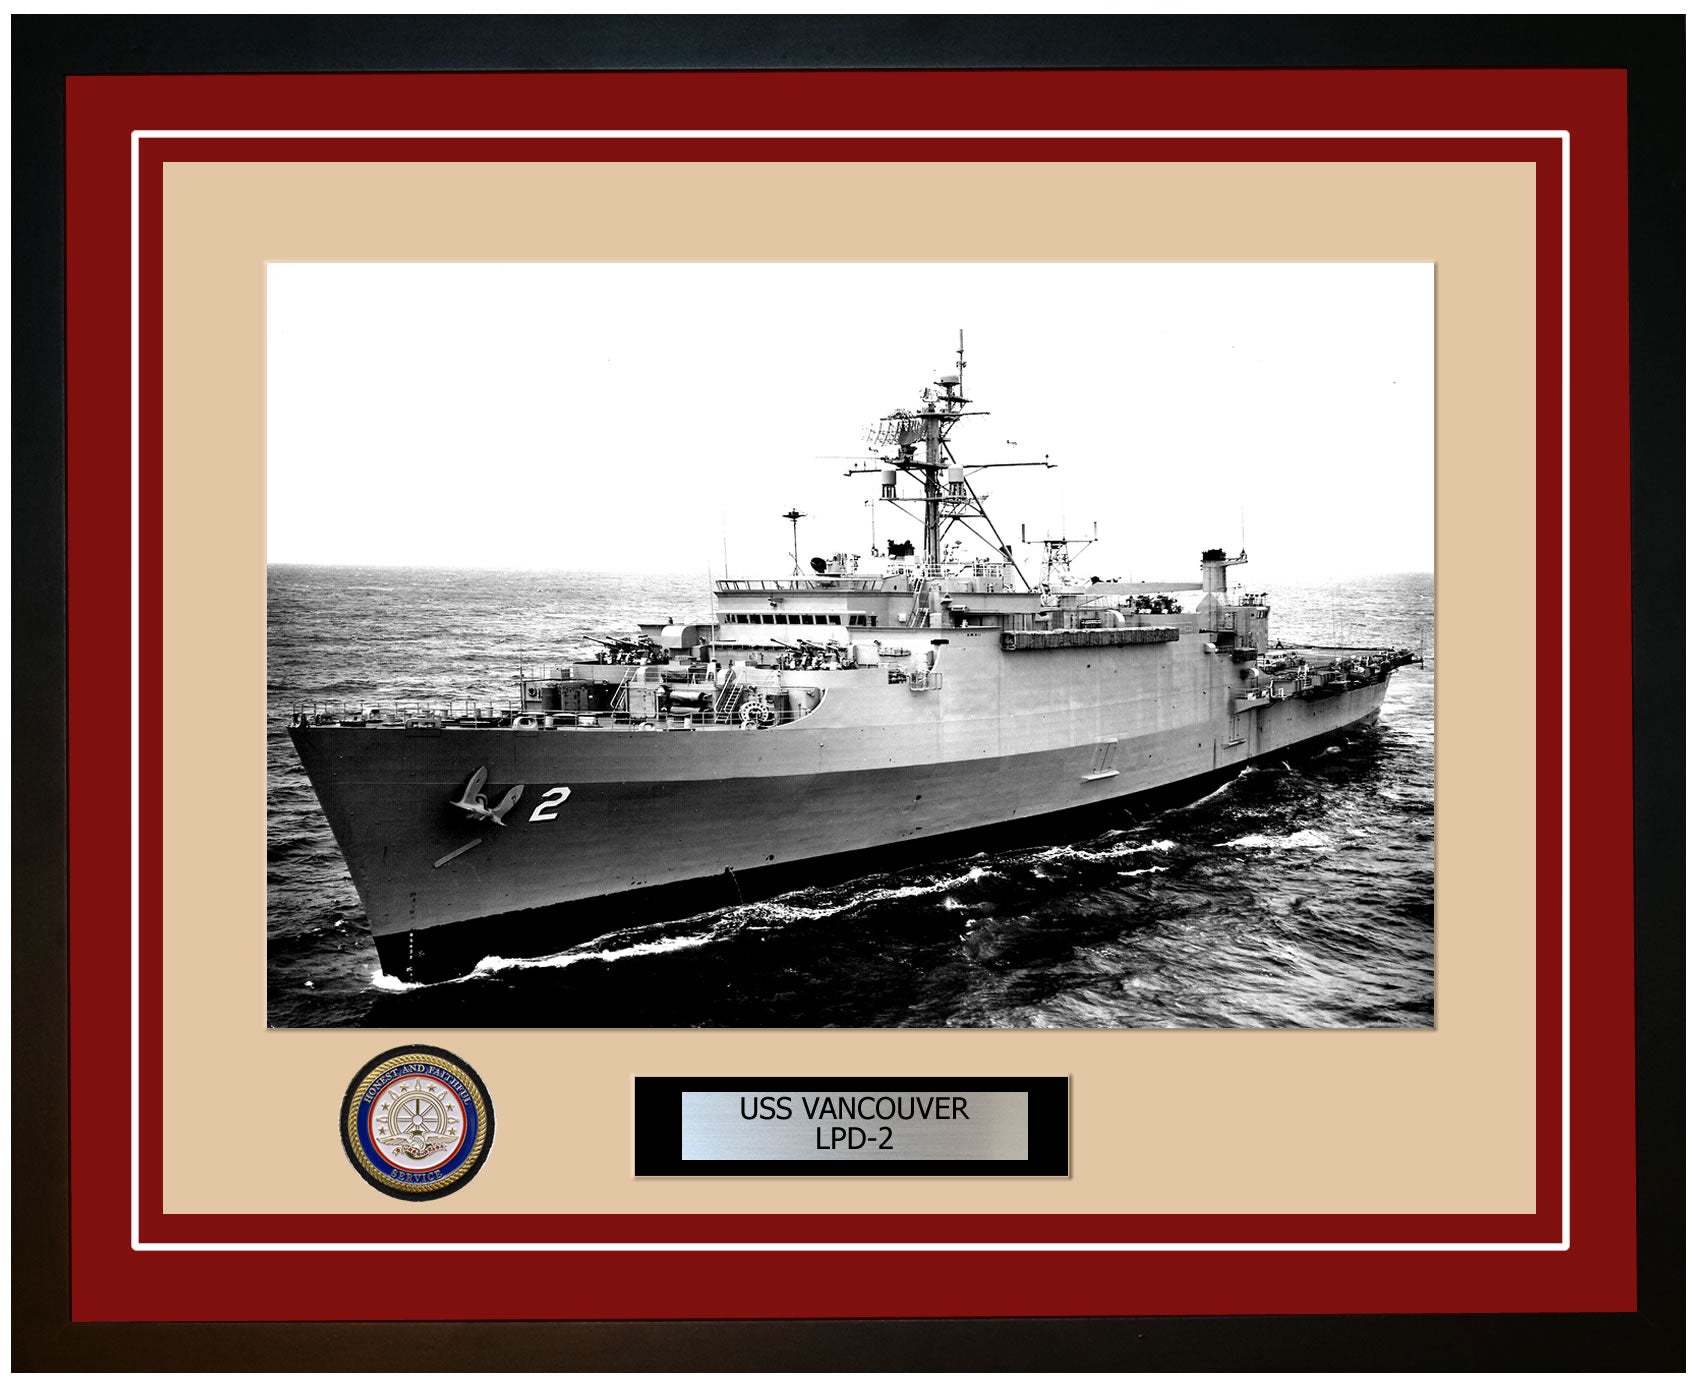 USS Vancouver LPD-2 Framed Navy Ship Photo Burgundy